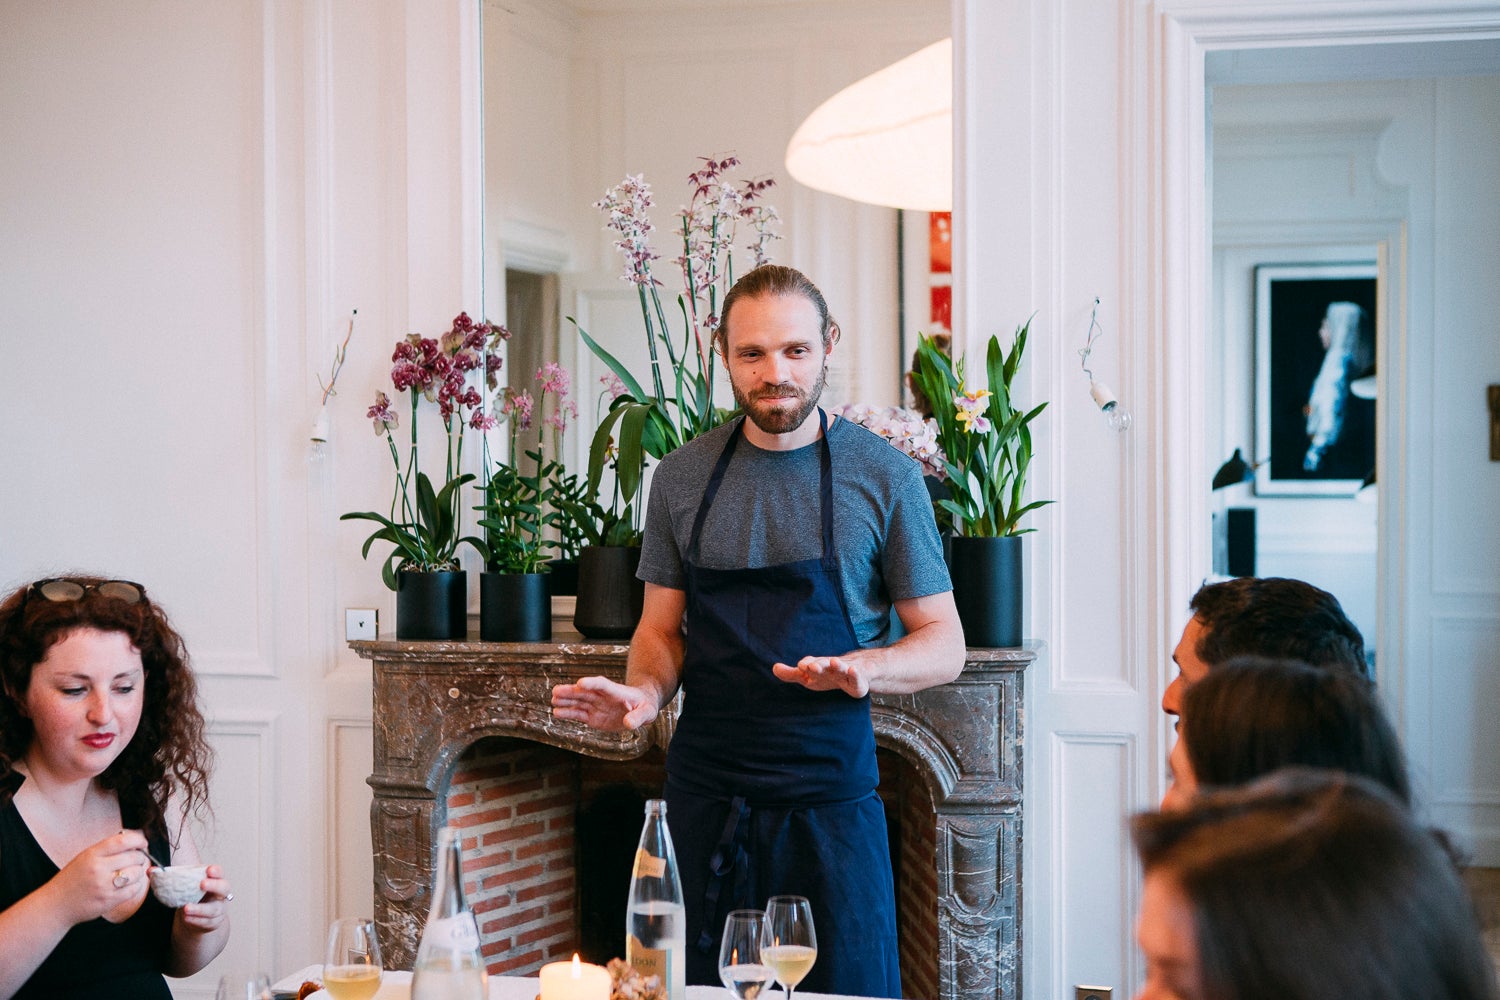 &#13;
Michelin-starred chef Sven Chartier explains the menu (Eurostar)&#13;